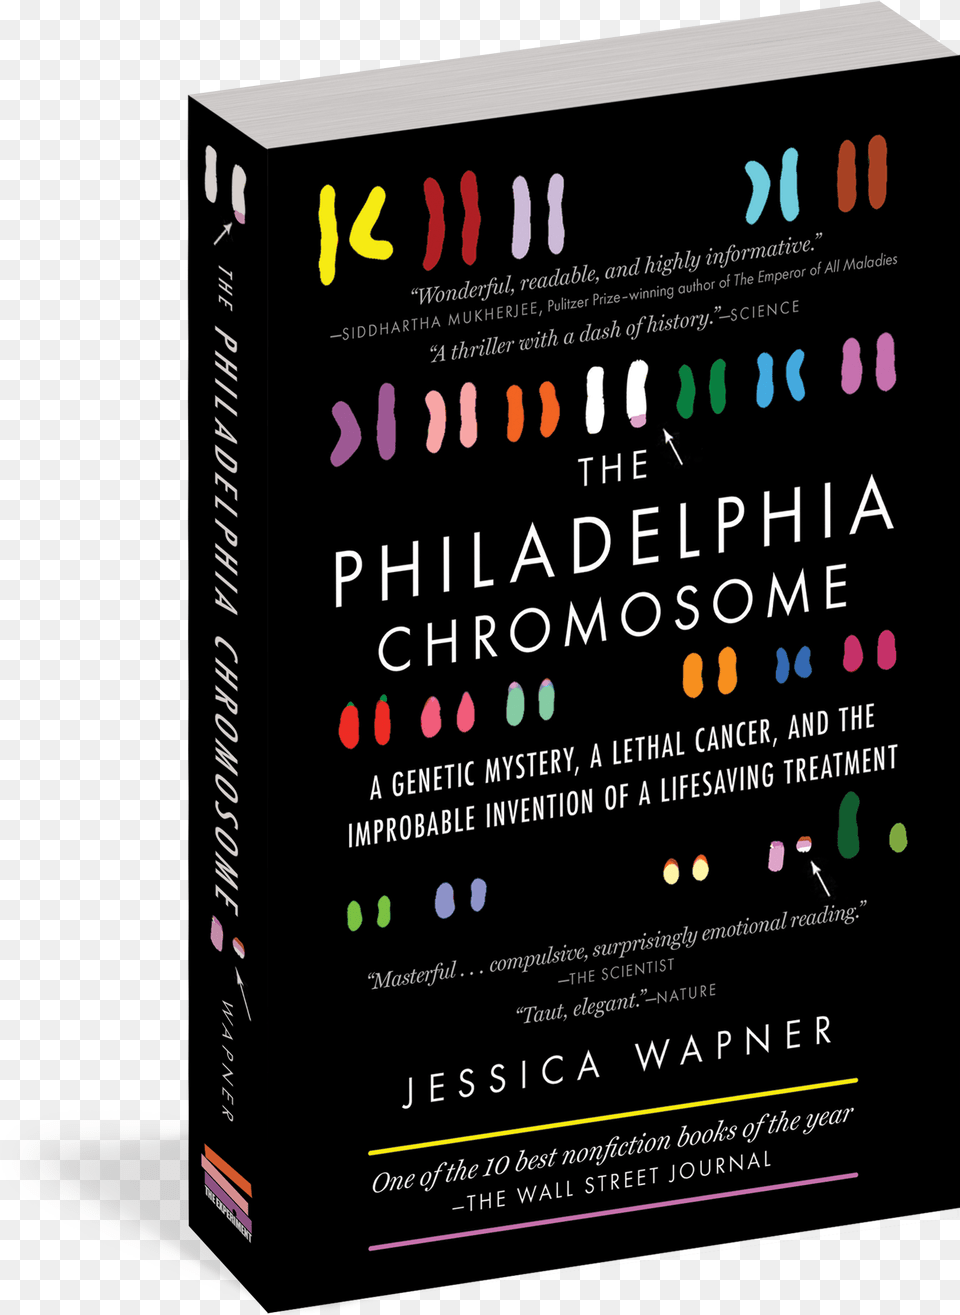 The Philadelphia Chromosome Amazon Book The Philadelphia Chromosome, Advertisement, Poster, Publication Png Image